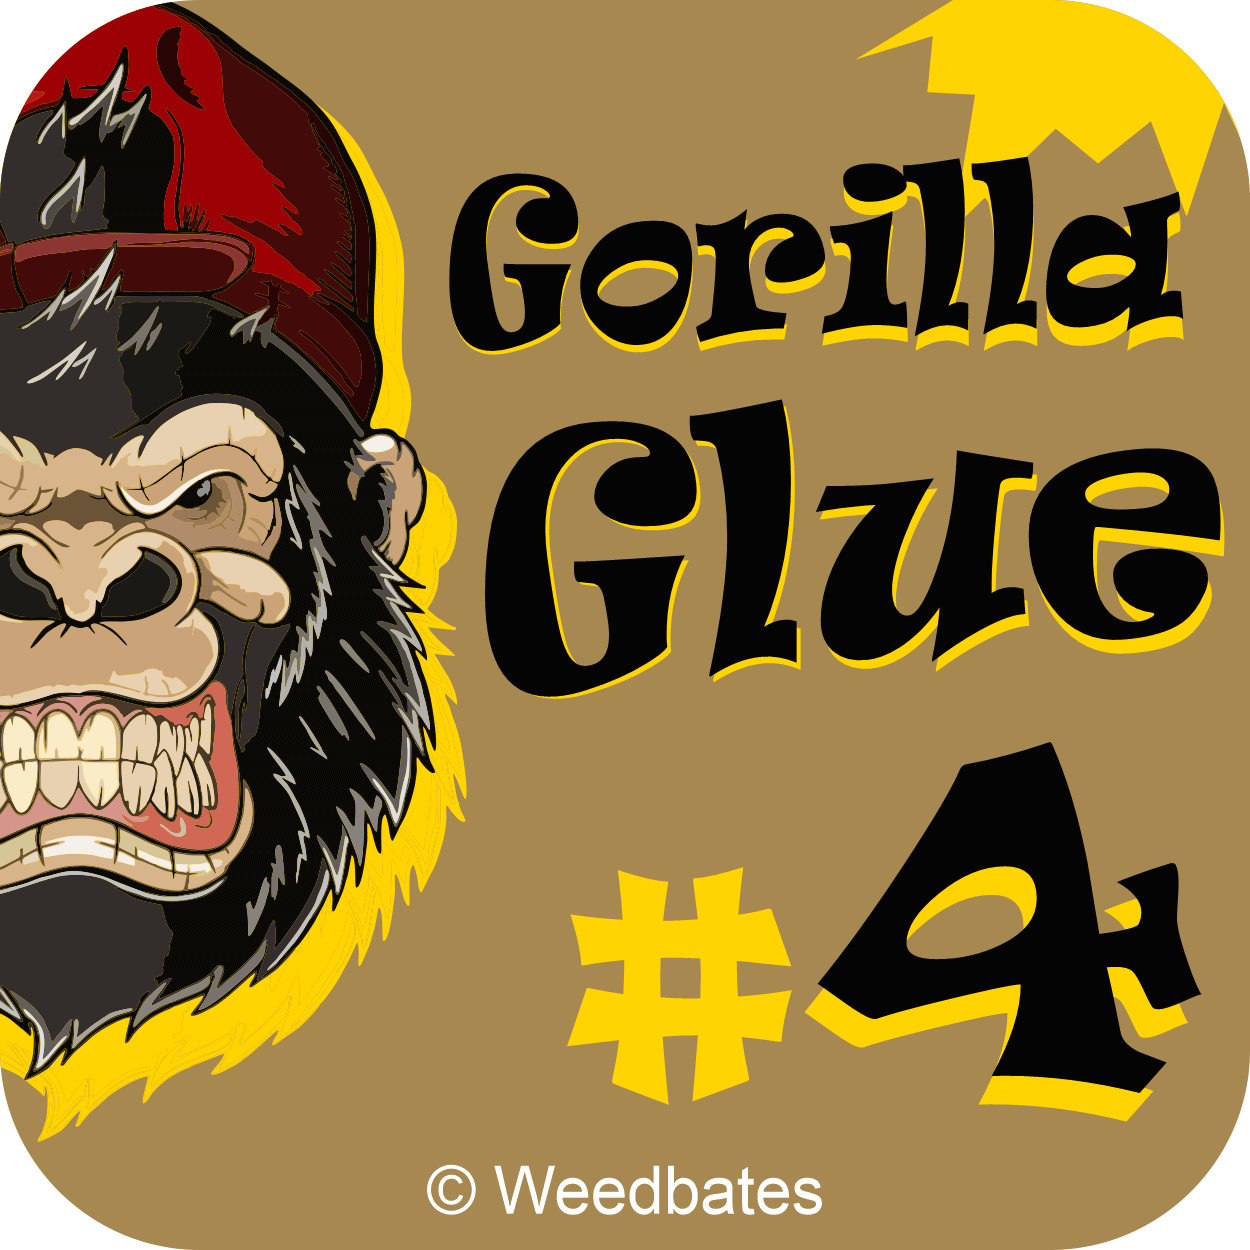 Gorilla Glue #4 strain